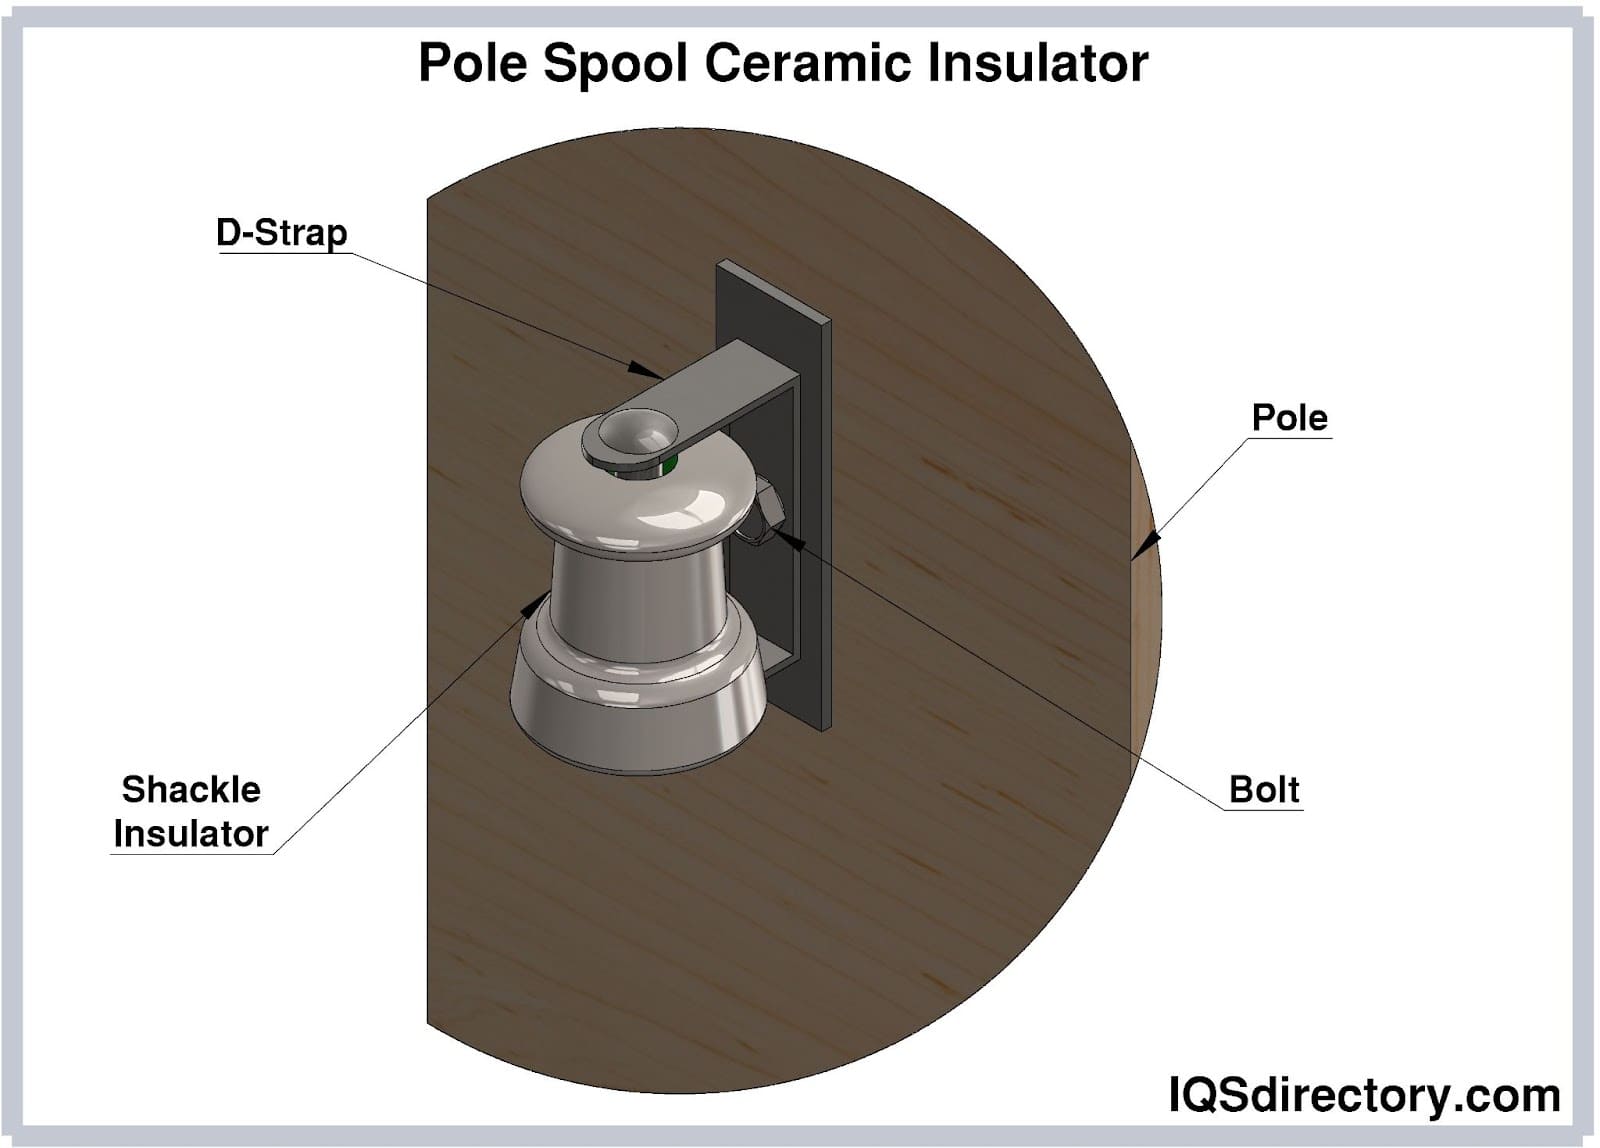 Pole Spool Ceramic Insulator